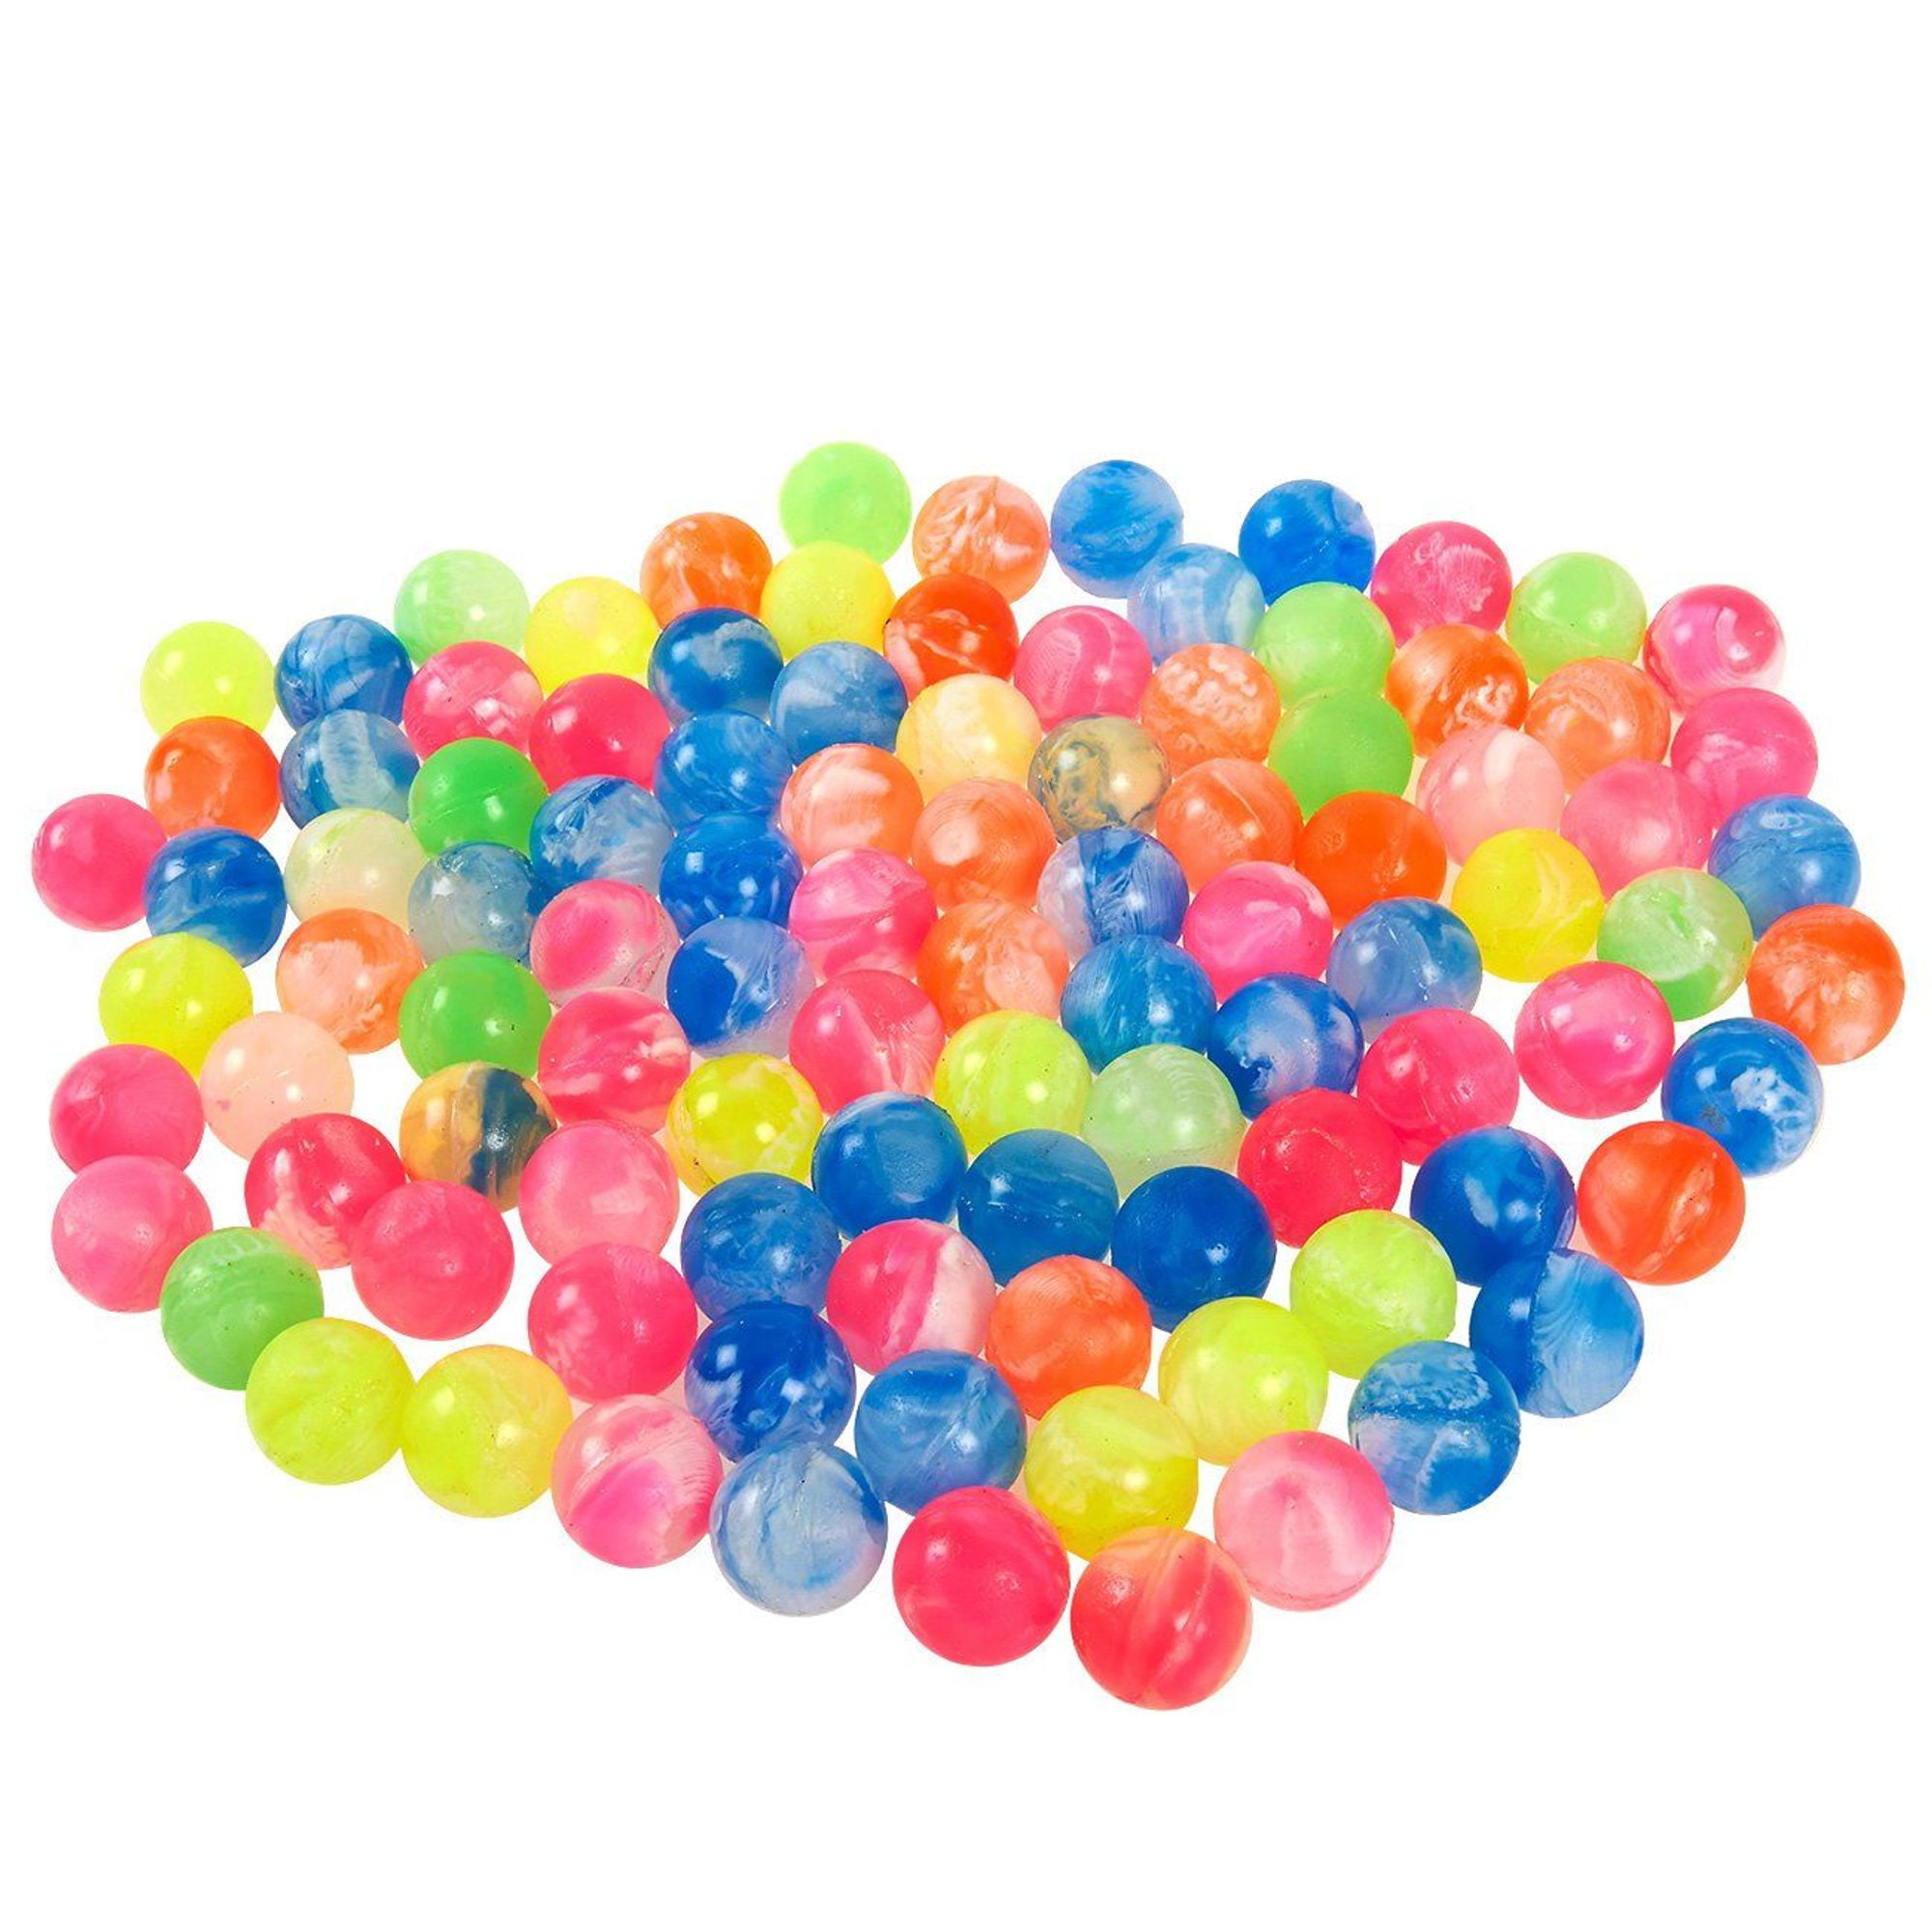 tiny rubber balls